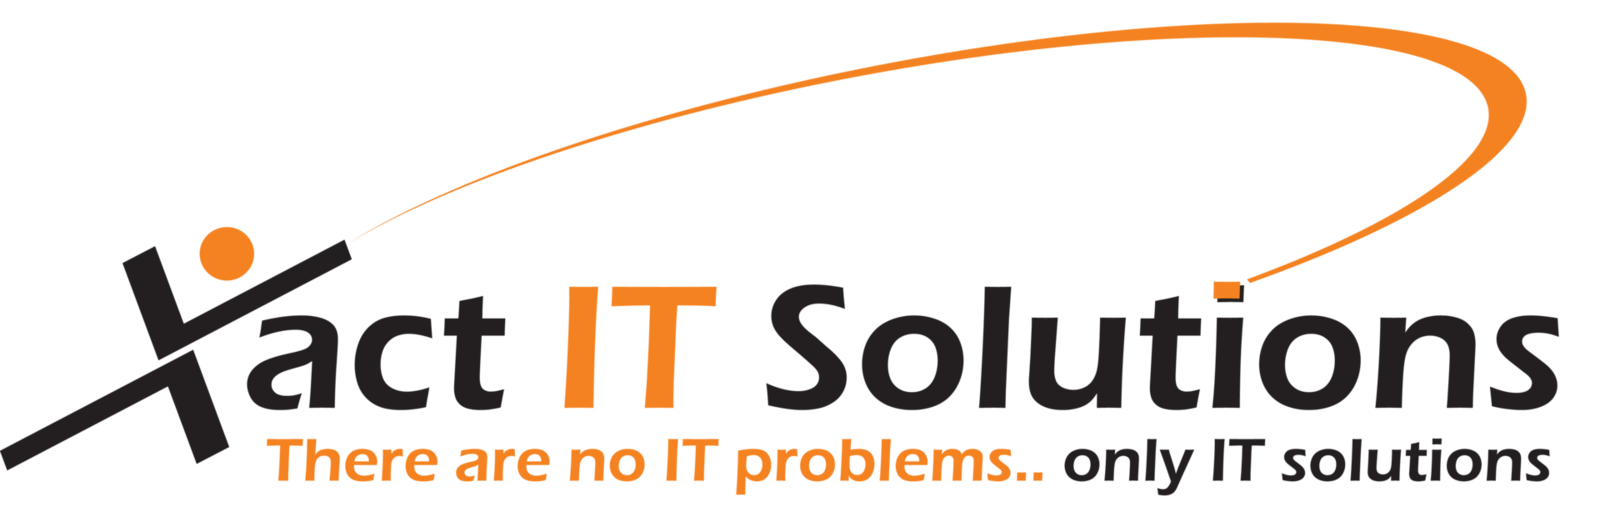 Xact IT Solutions Earns CompTIA Security Trustmark+